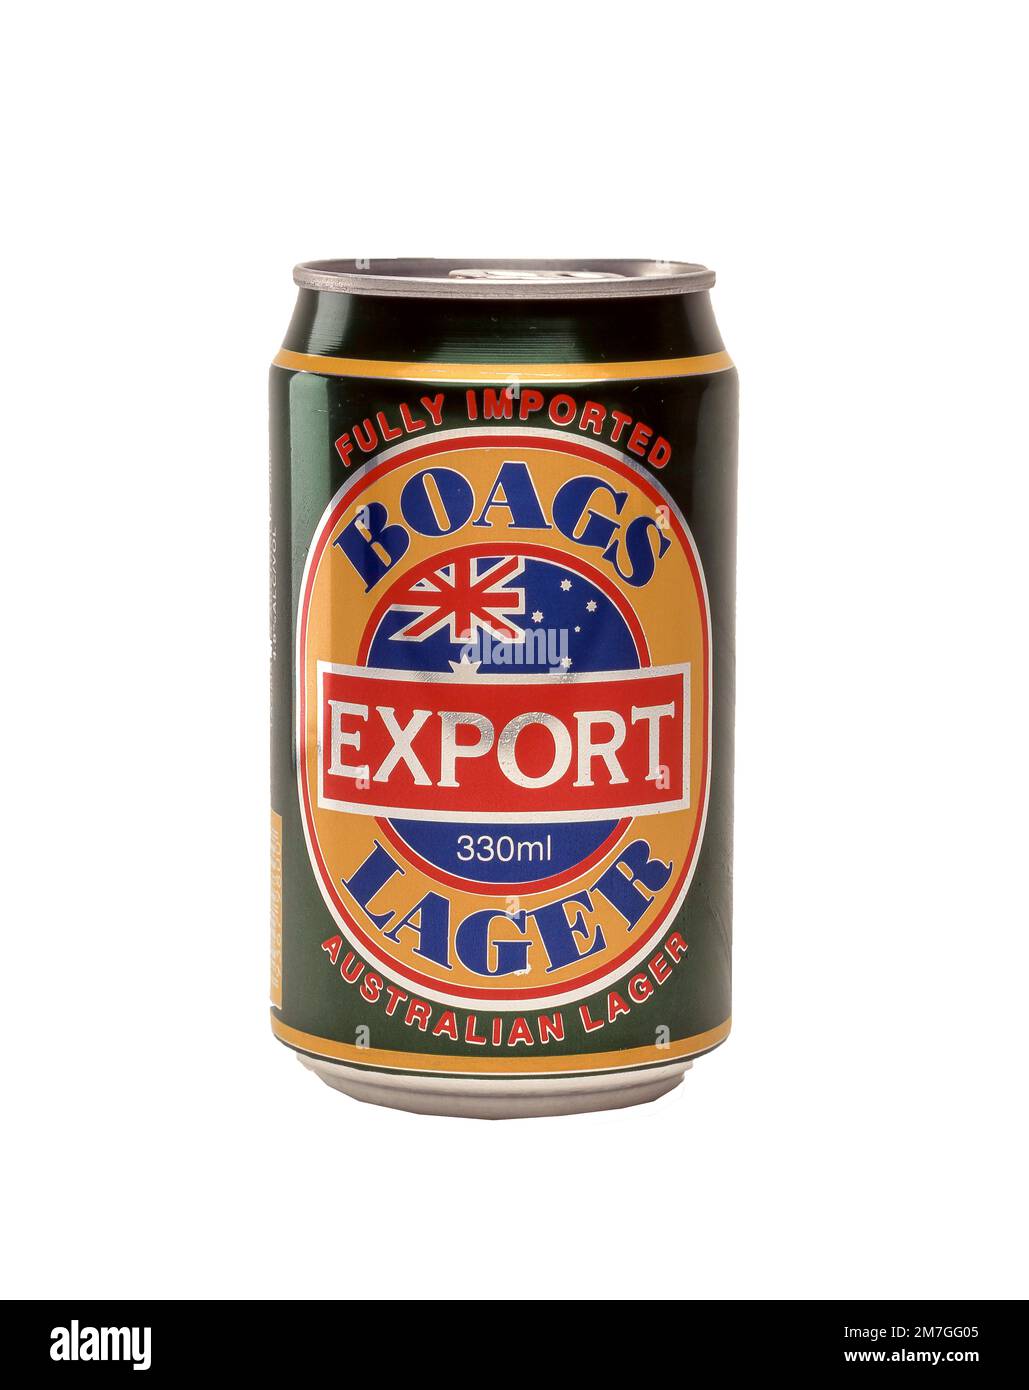 CAN of Boag's Brewery Australian export lager, Sydney, Nouvelle-Galles du Sud, Australie Banque D'Images